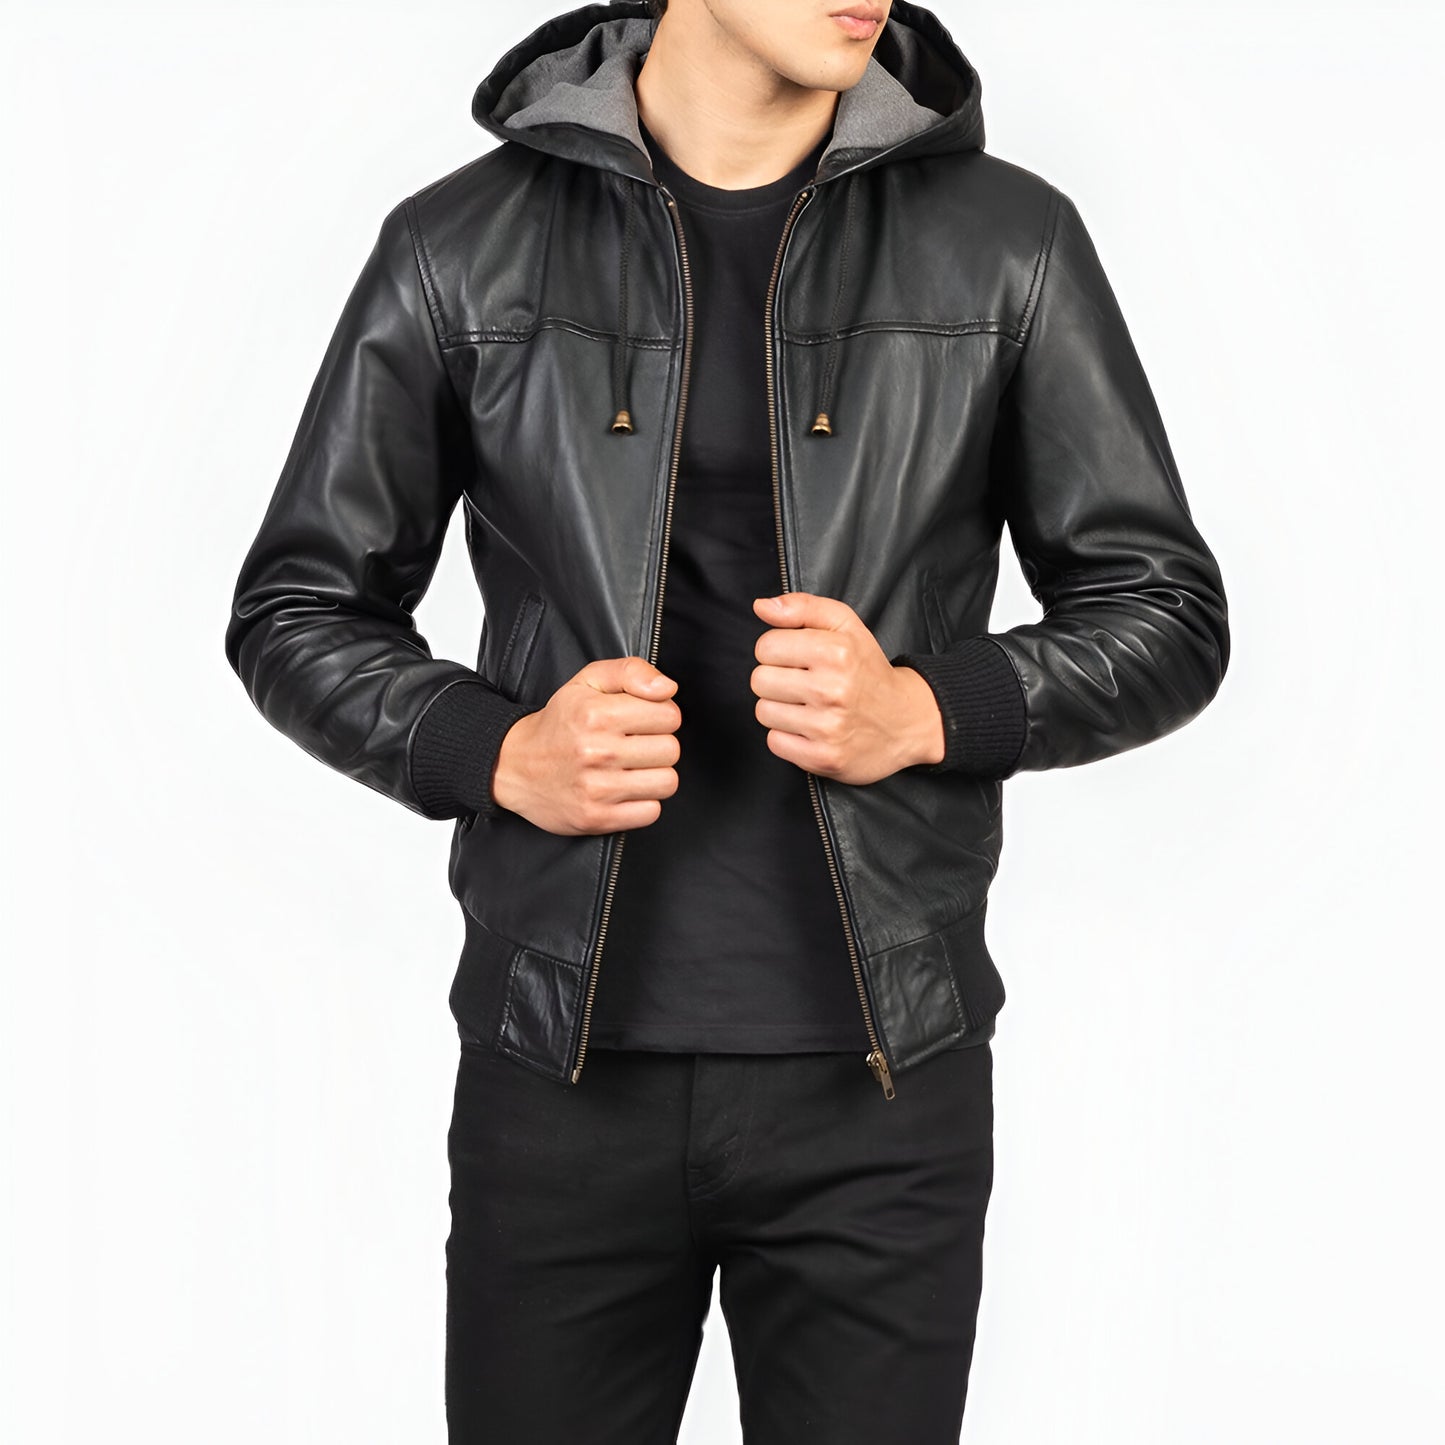 Dicks Leather Black Hooded Leather Bomber Jacket